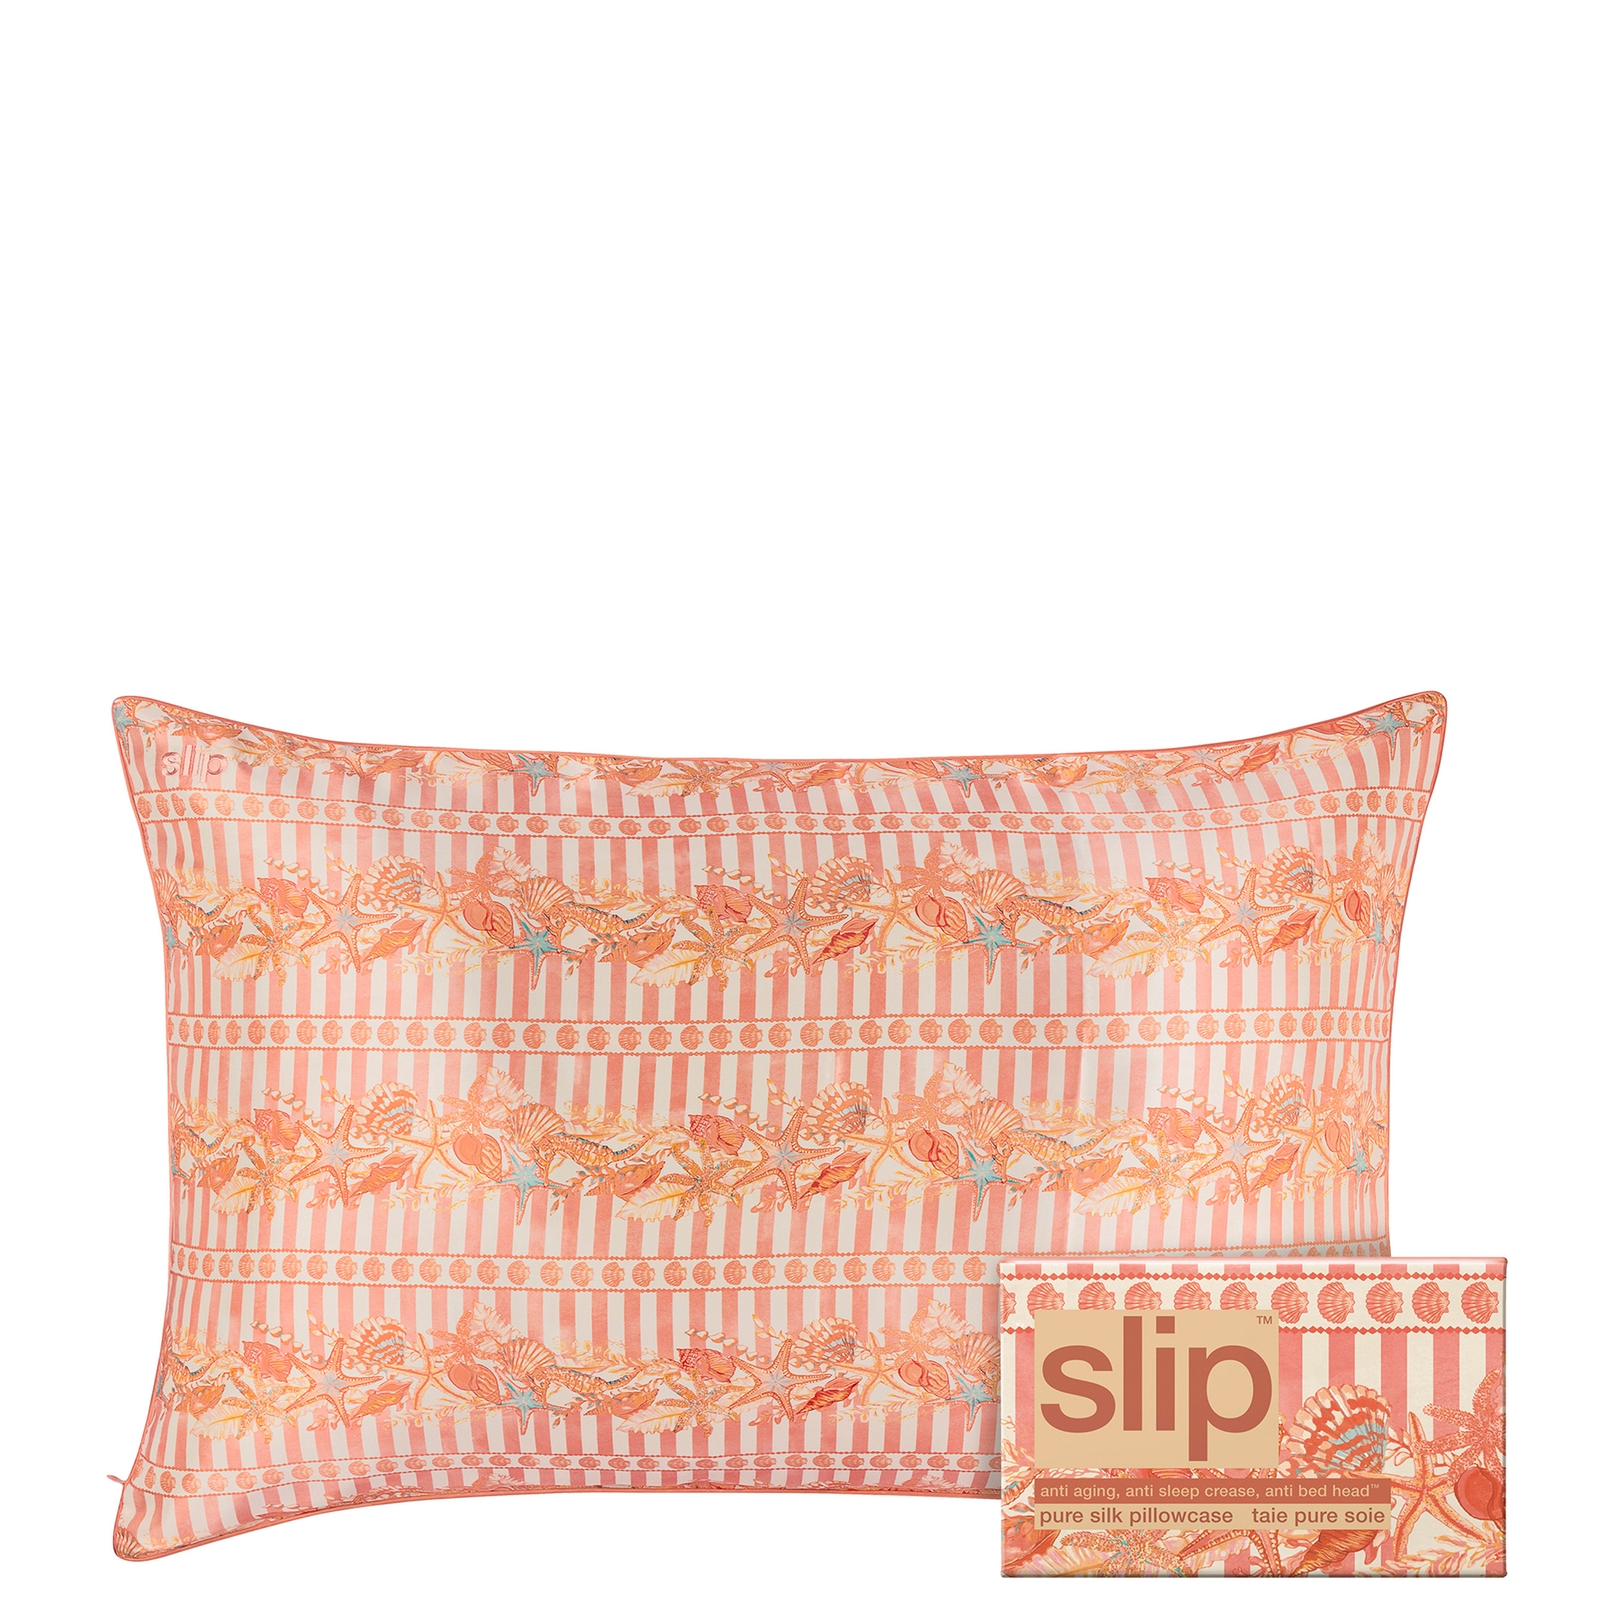 Slip Pure Silk Queen Pillowcase - Seashell In White